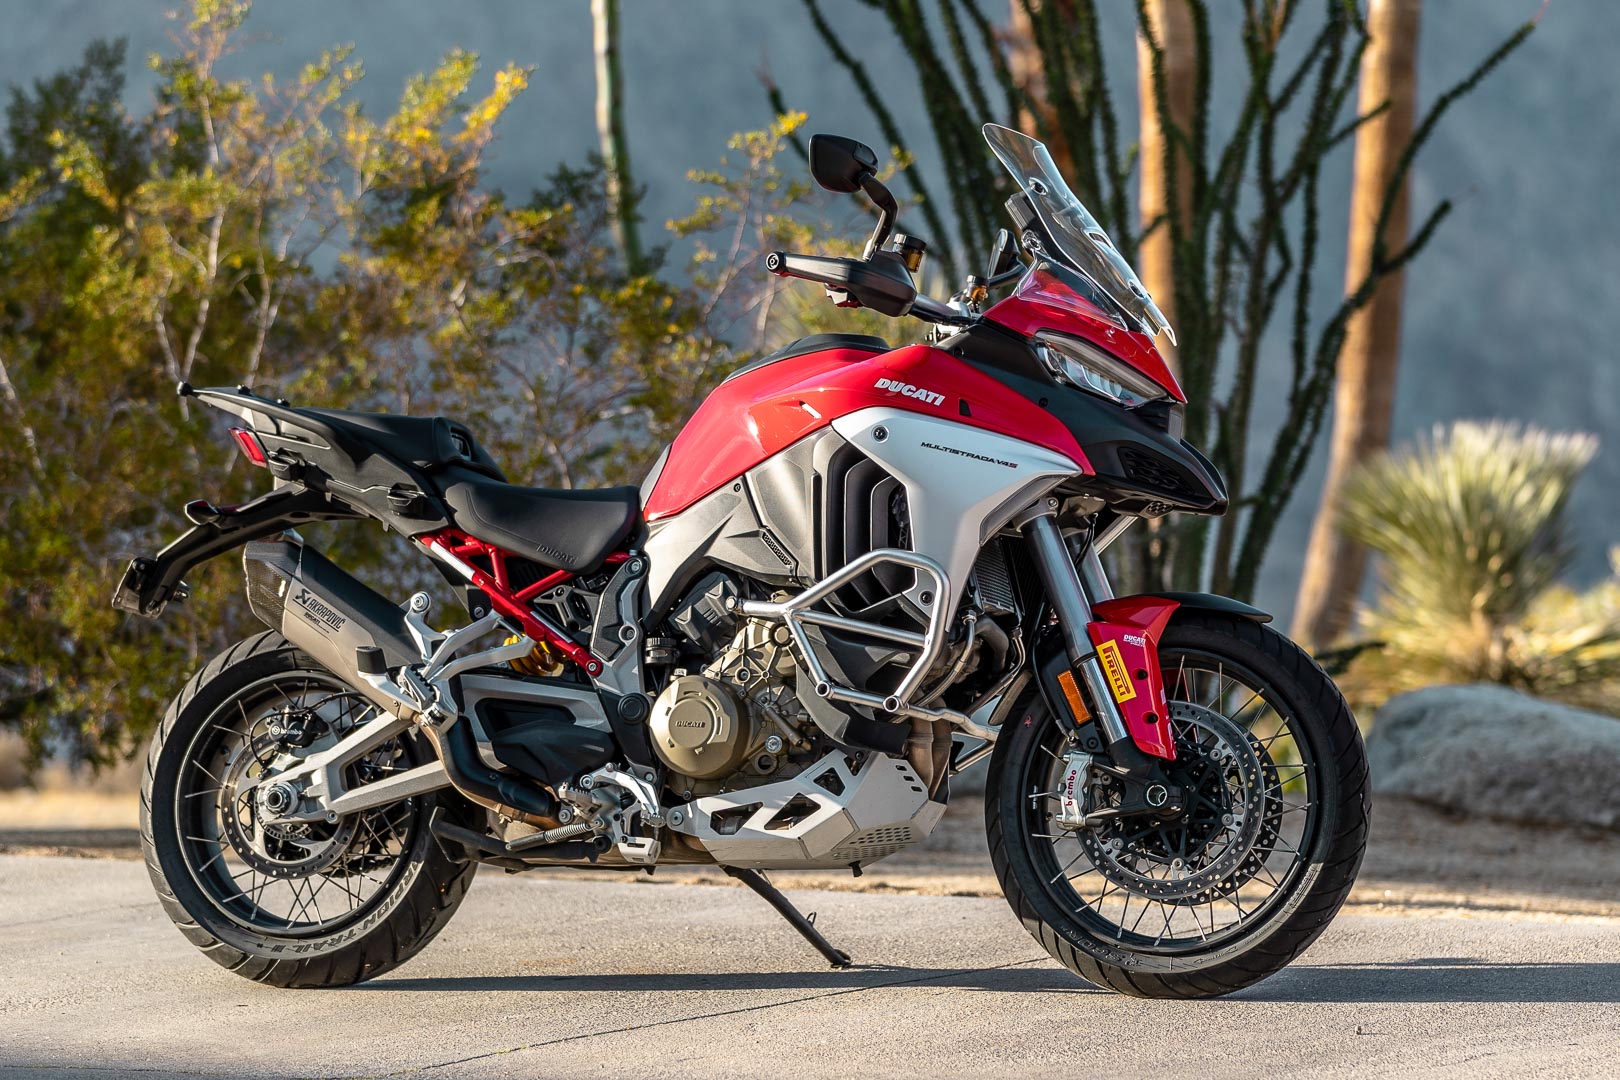 2021-ducati-mulitstrada-v4-s-review-adv-sport-touring-adventure-motorcycle-8.jpeg